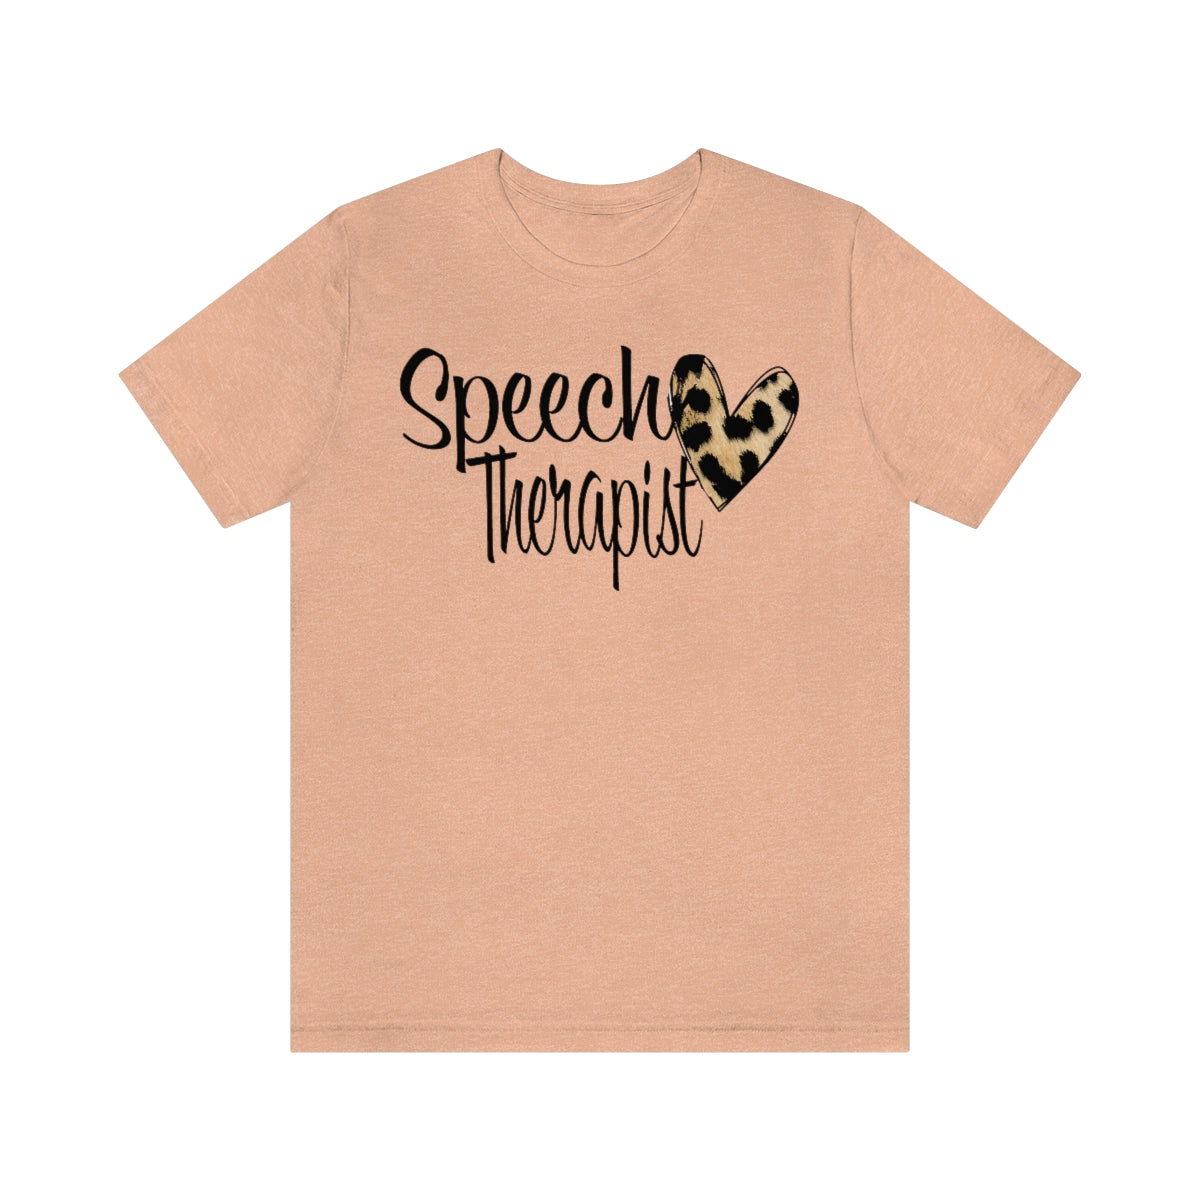 Speech Therapist SLP Shirt Unisex Jersey Short Sleeve Graphic Tee